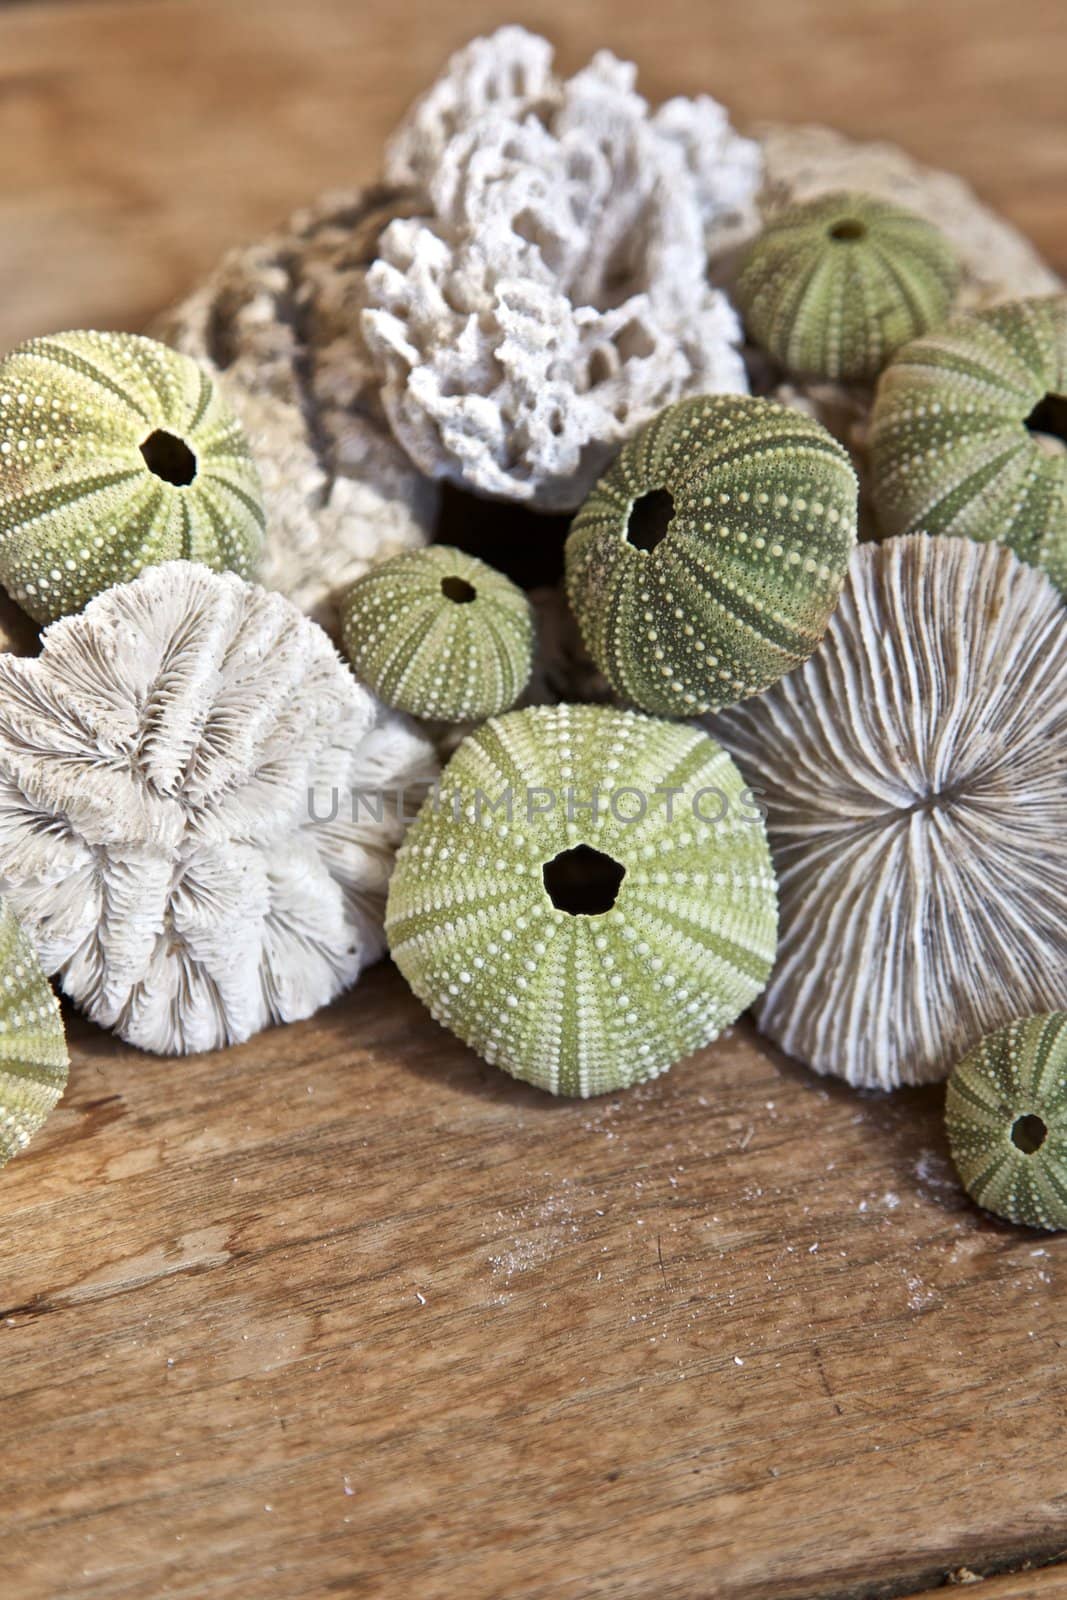 Sea urchins by instinia